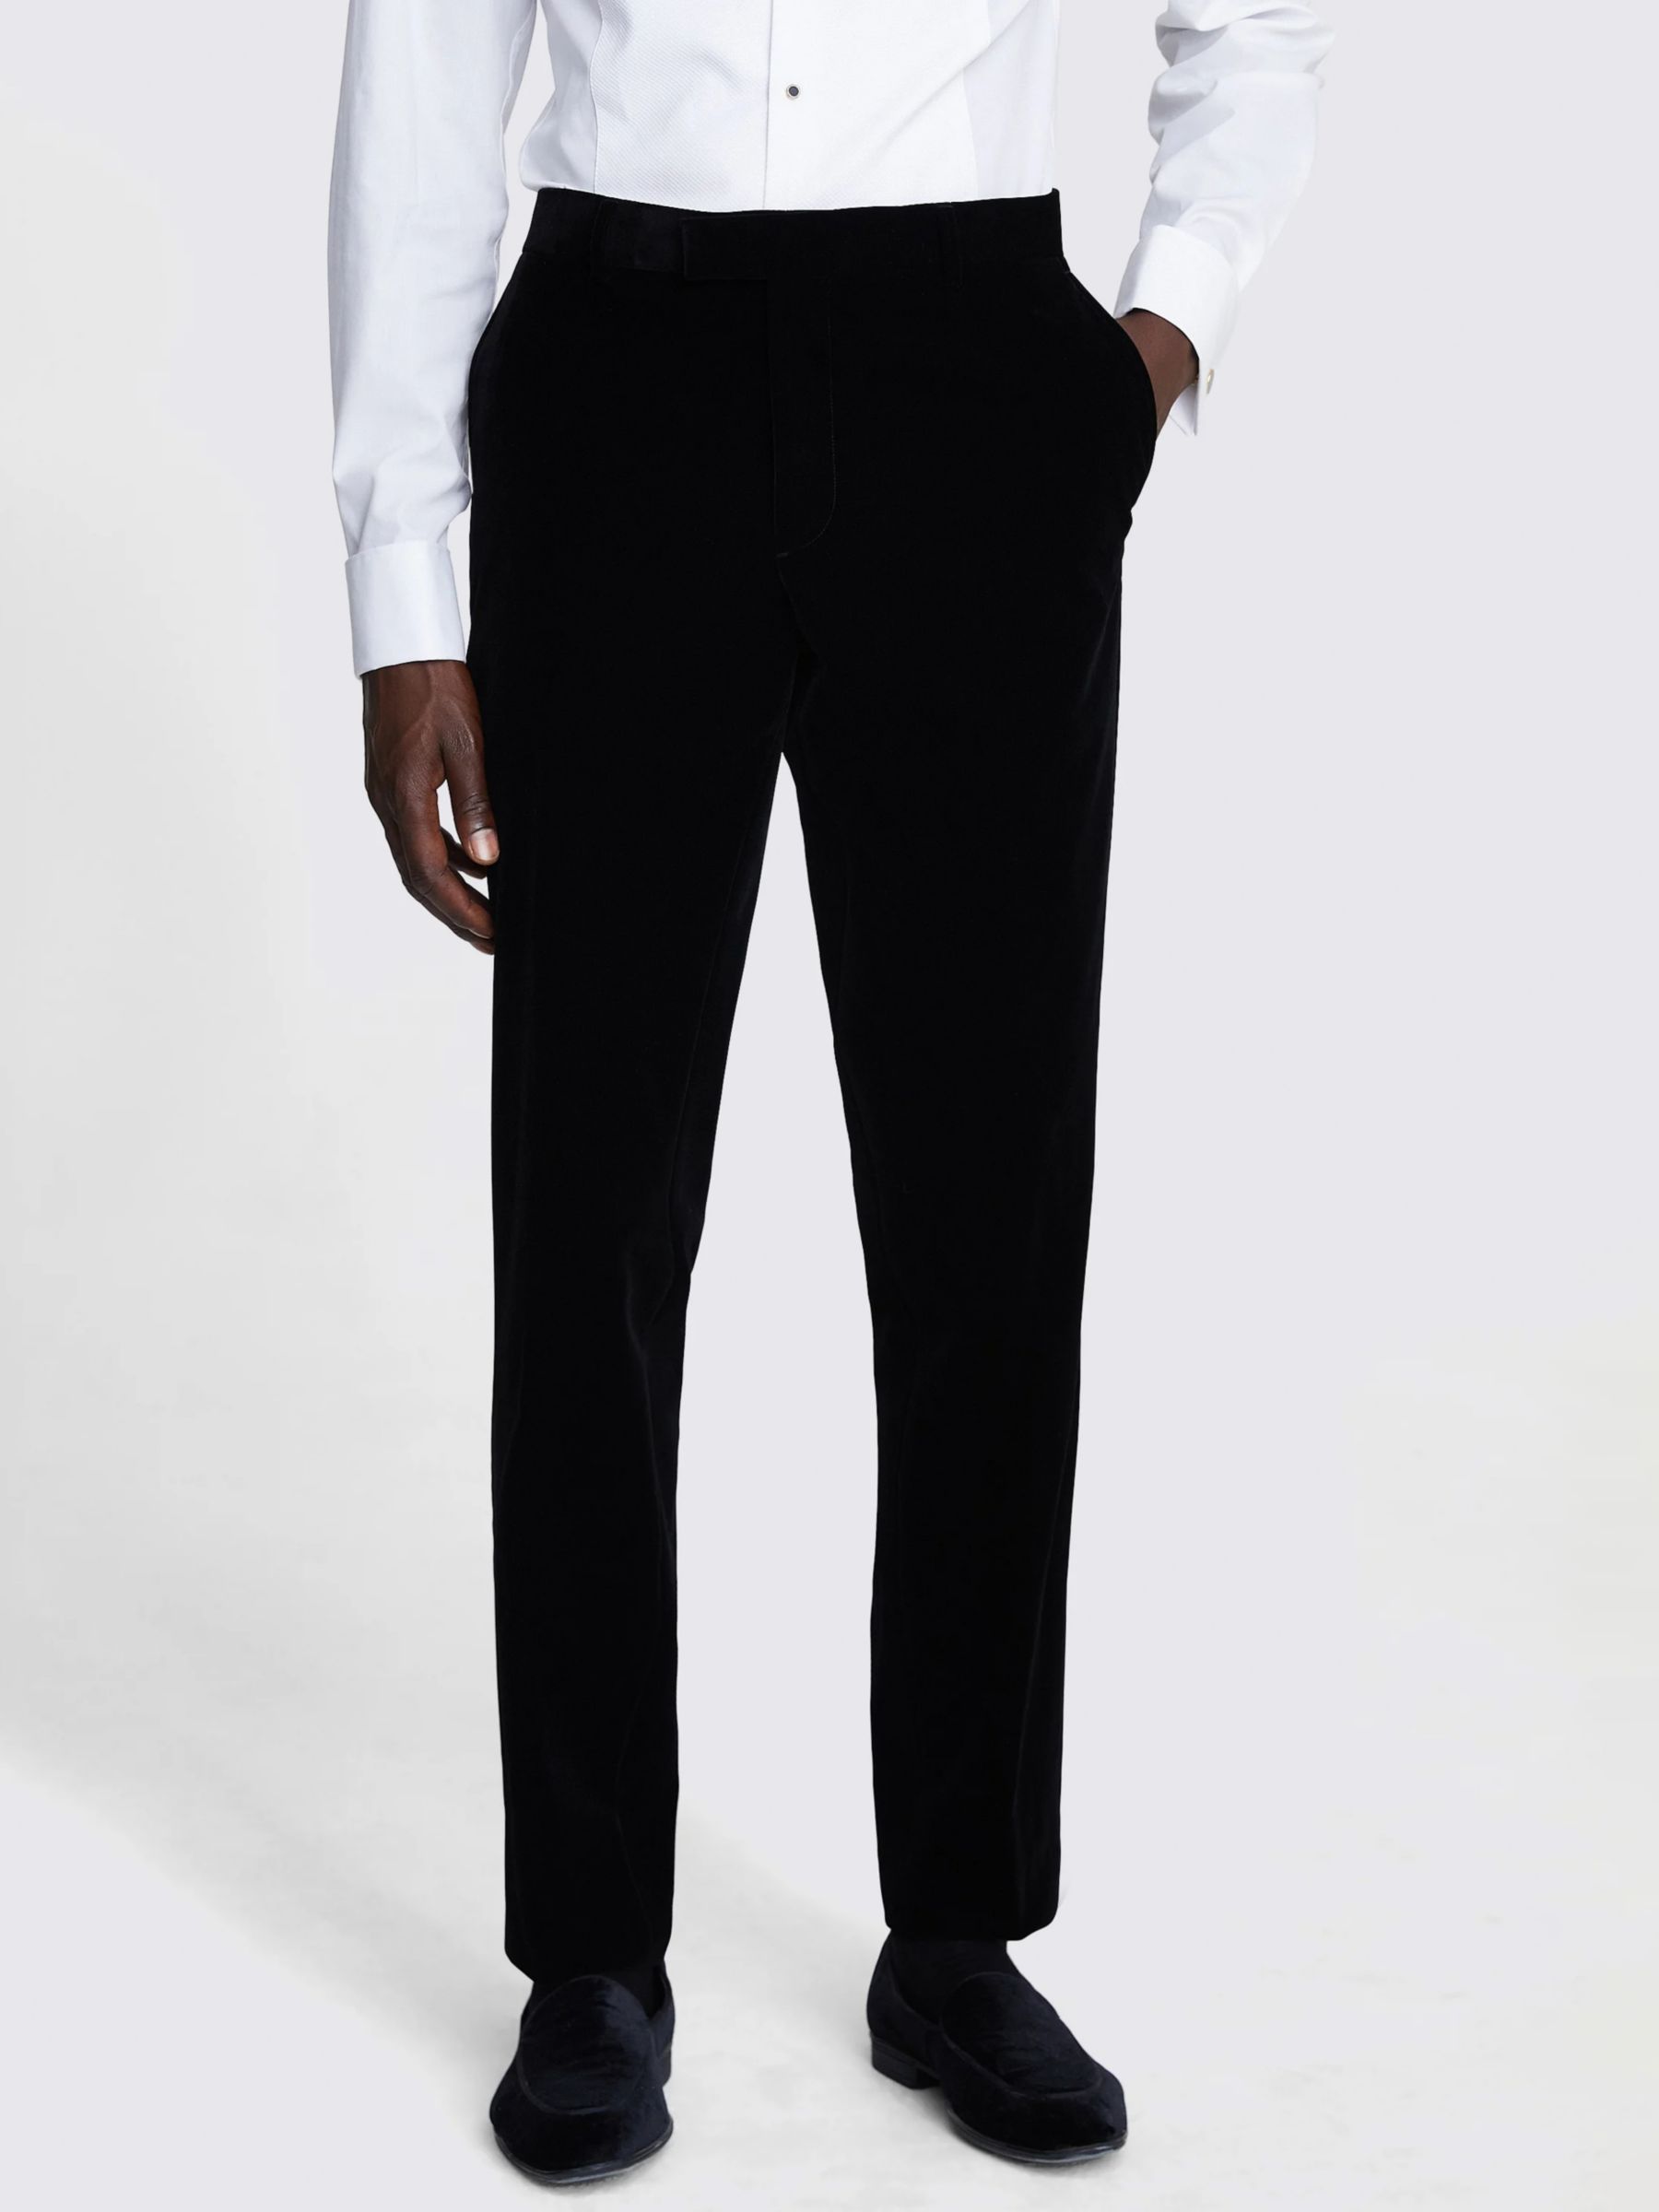 Moss Slim Fit Velvet Dress Trousers, Black at John Lewis & Partners